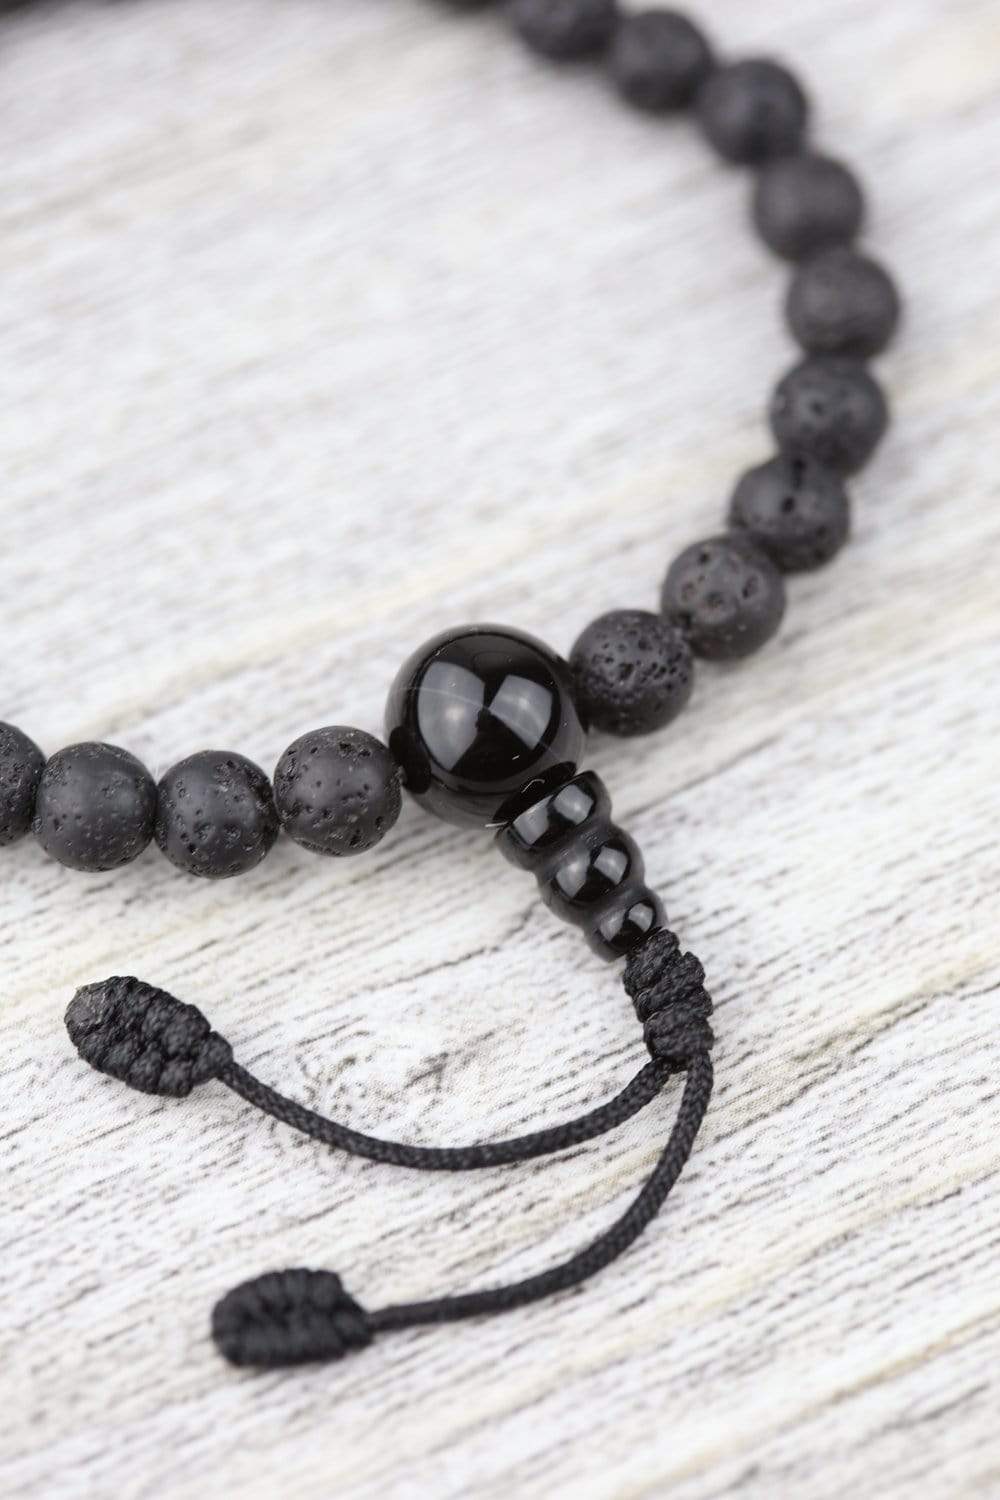 Double Wrap Lava Rock and Thai Wood Beads Mala Bracelet Necklace -  DharmaShop